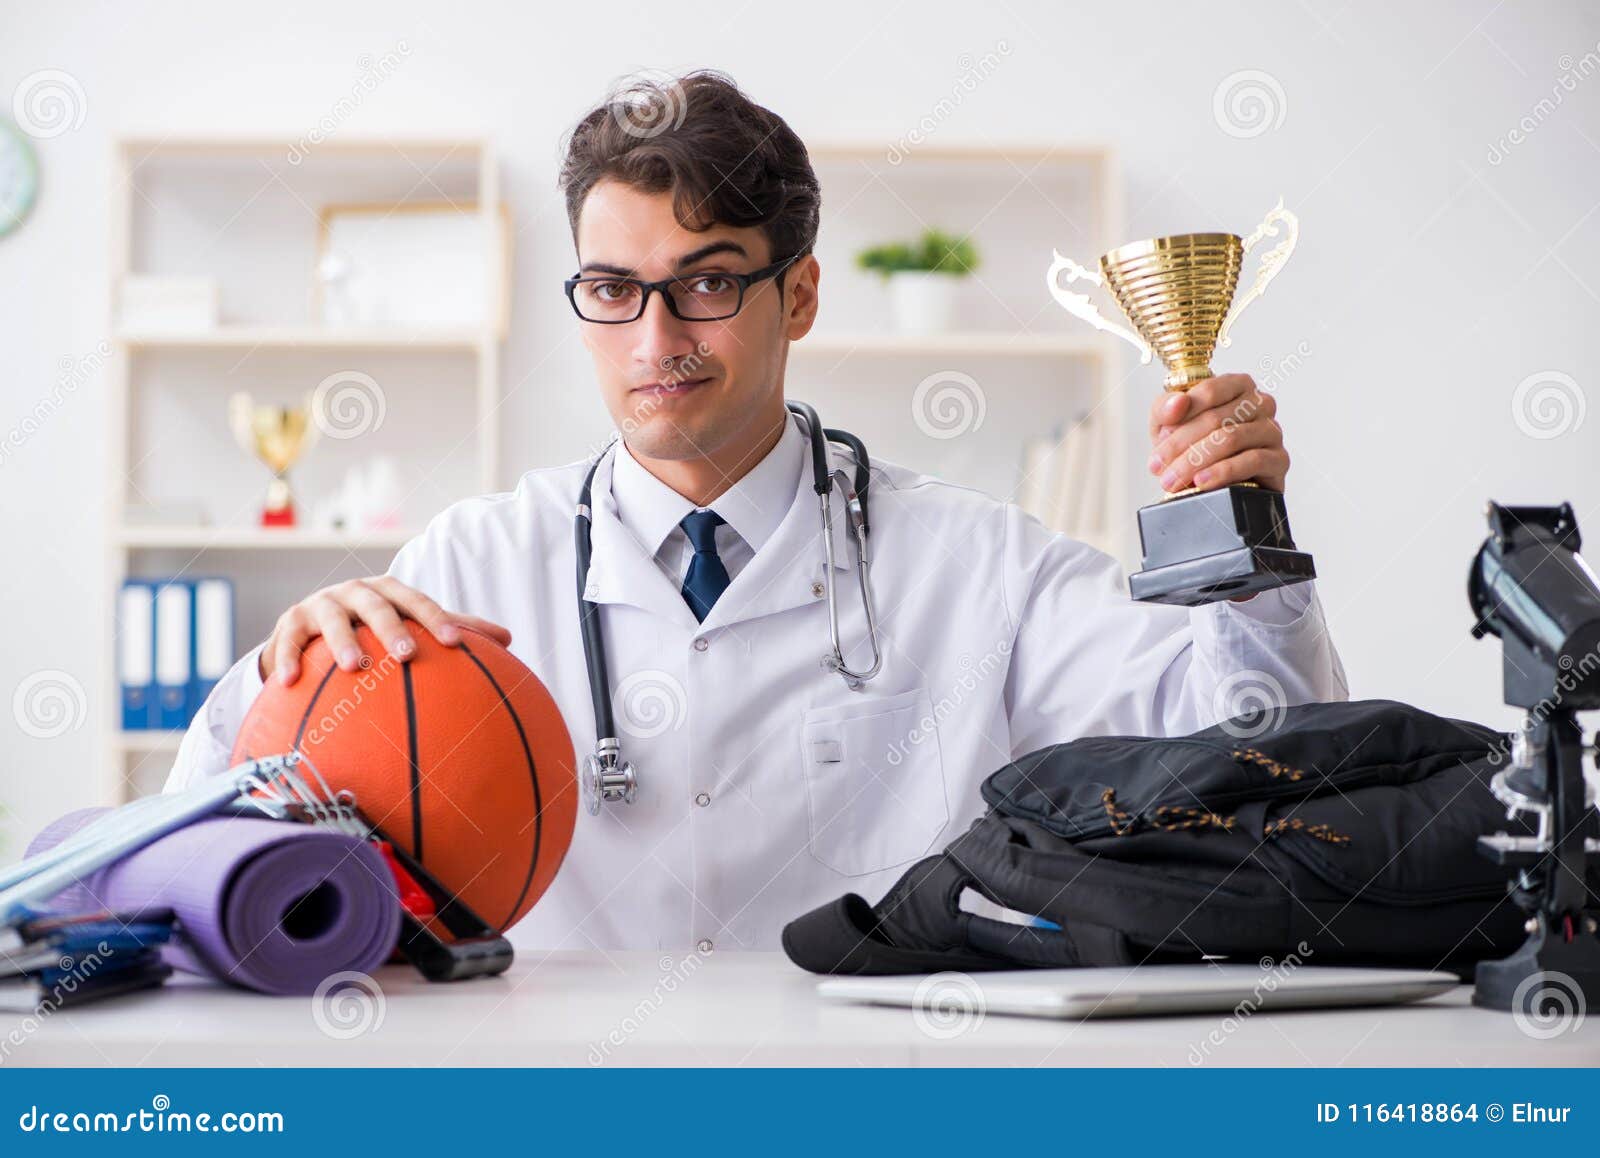 Прием спортивного врача. Спорт врач. Медик спортсмен. Спортивный ученый. Ученые и спорт.